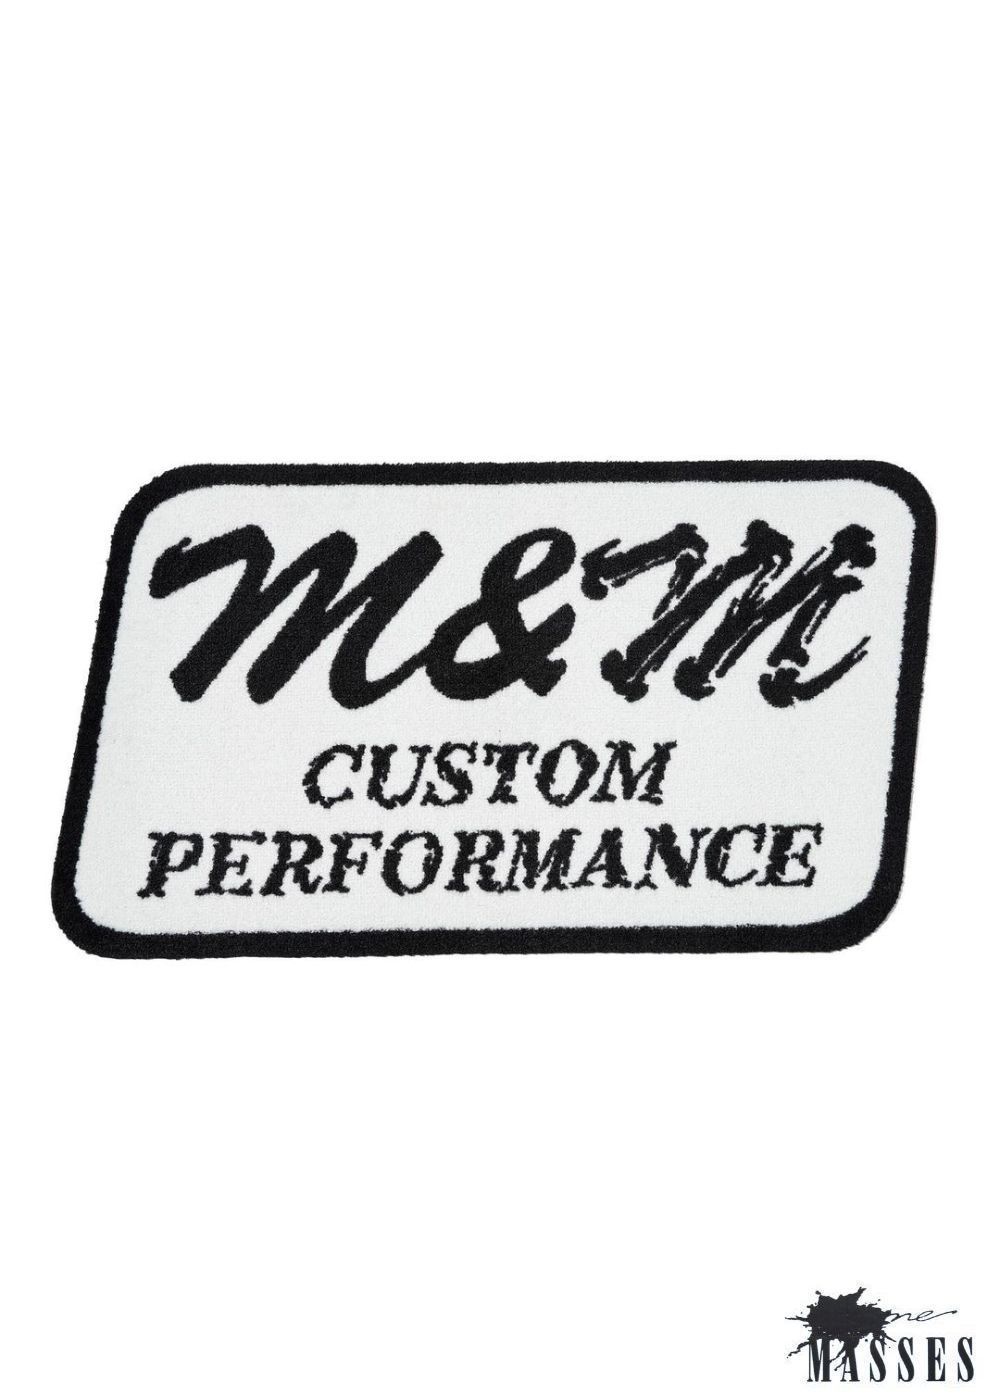 M&M CUSTOM PERFORMANCE × MASSES ラグマット | iro.pk.edu.pl